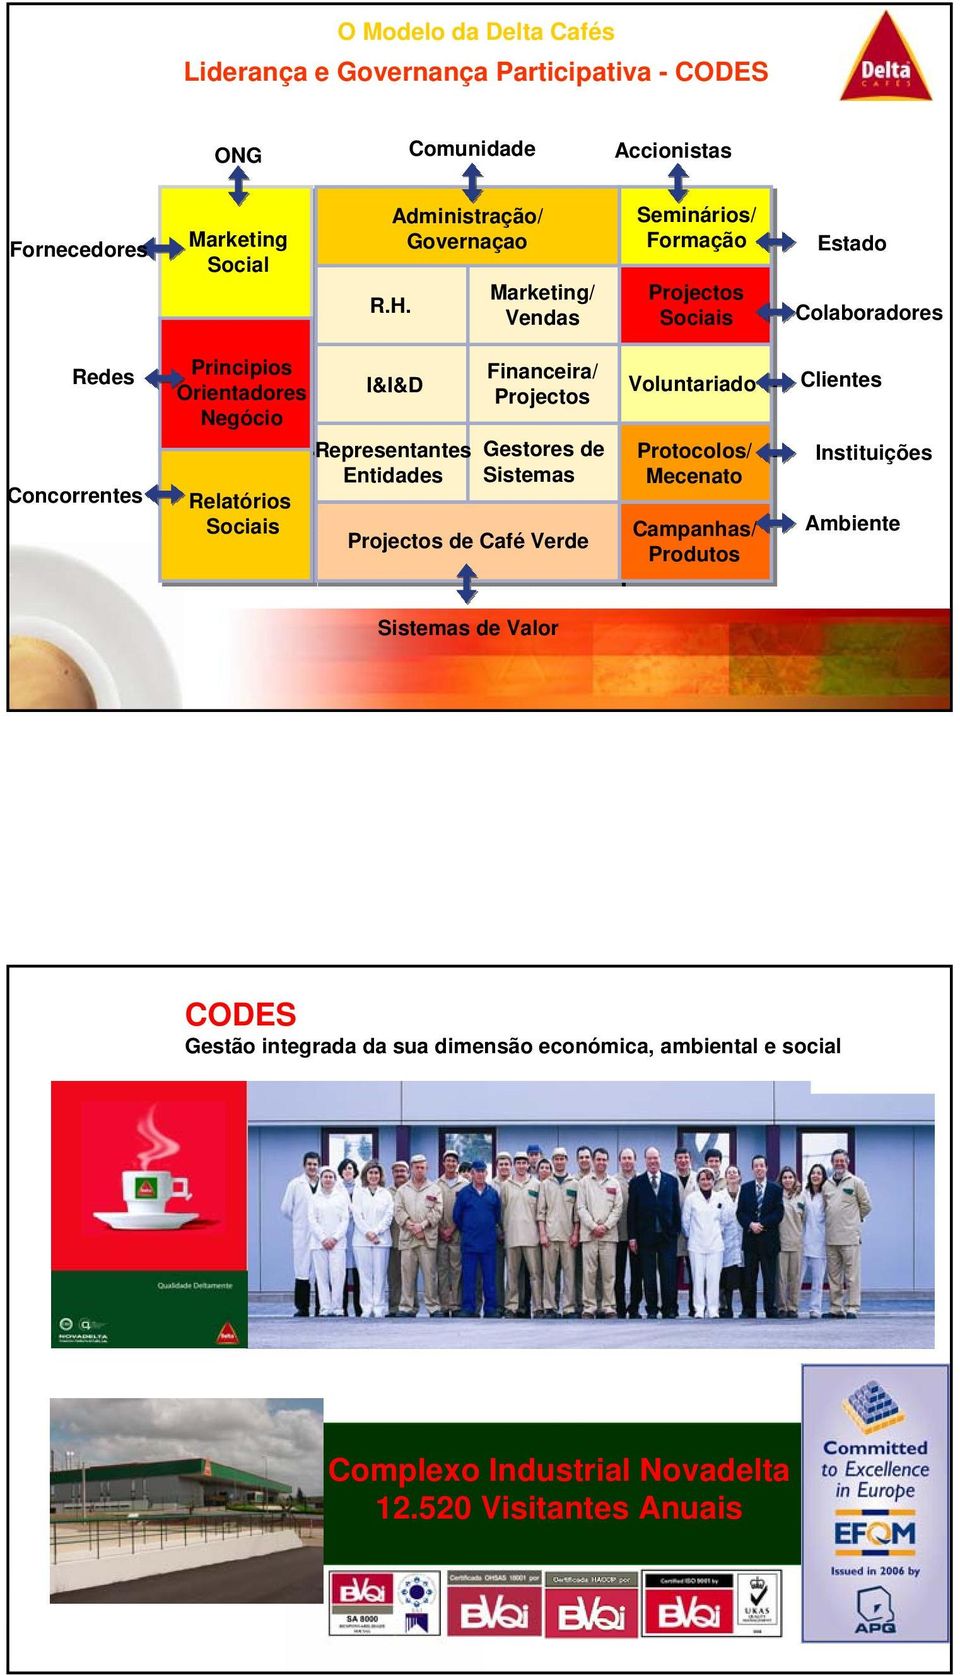 Relatórios Sociais I&I&D Representantes Entidades Financeira/ Projectos Gestores de Sistemas Projectos de Café Verde Voluntariado Protocolos/ Mecenato